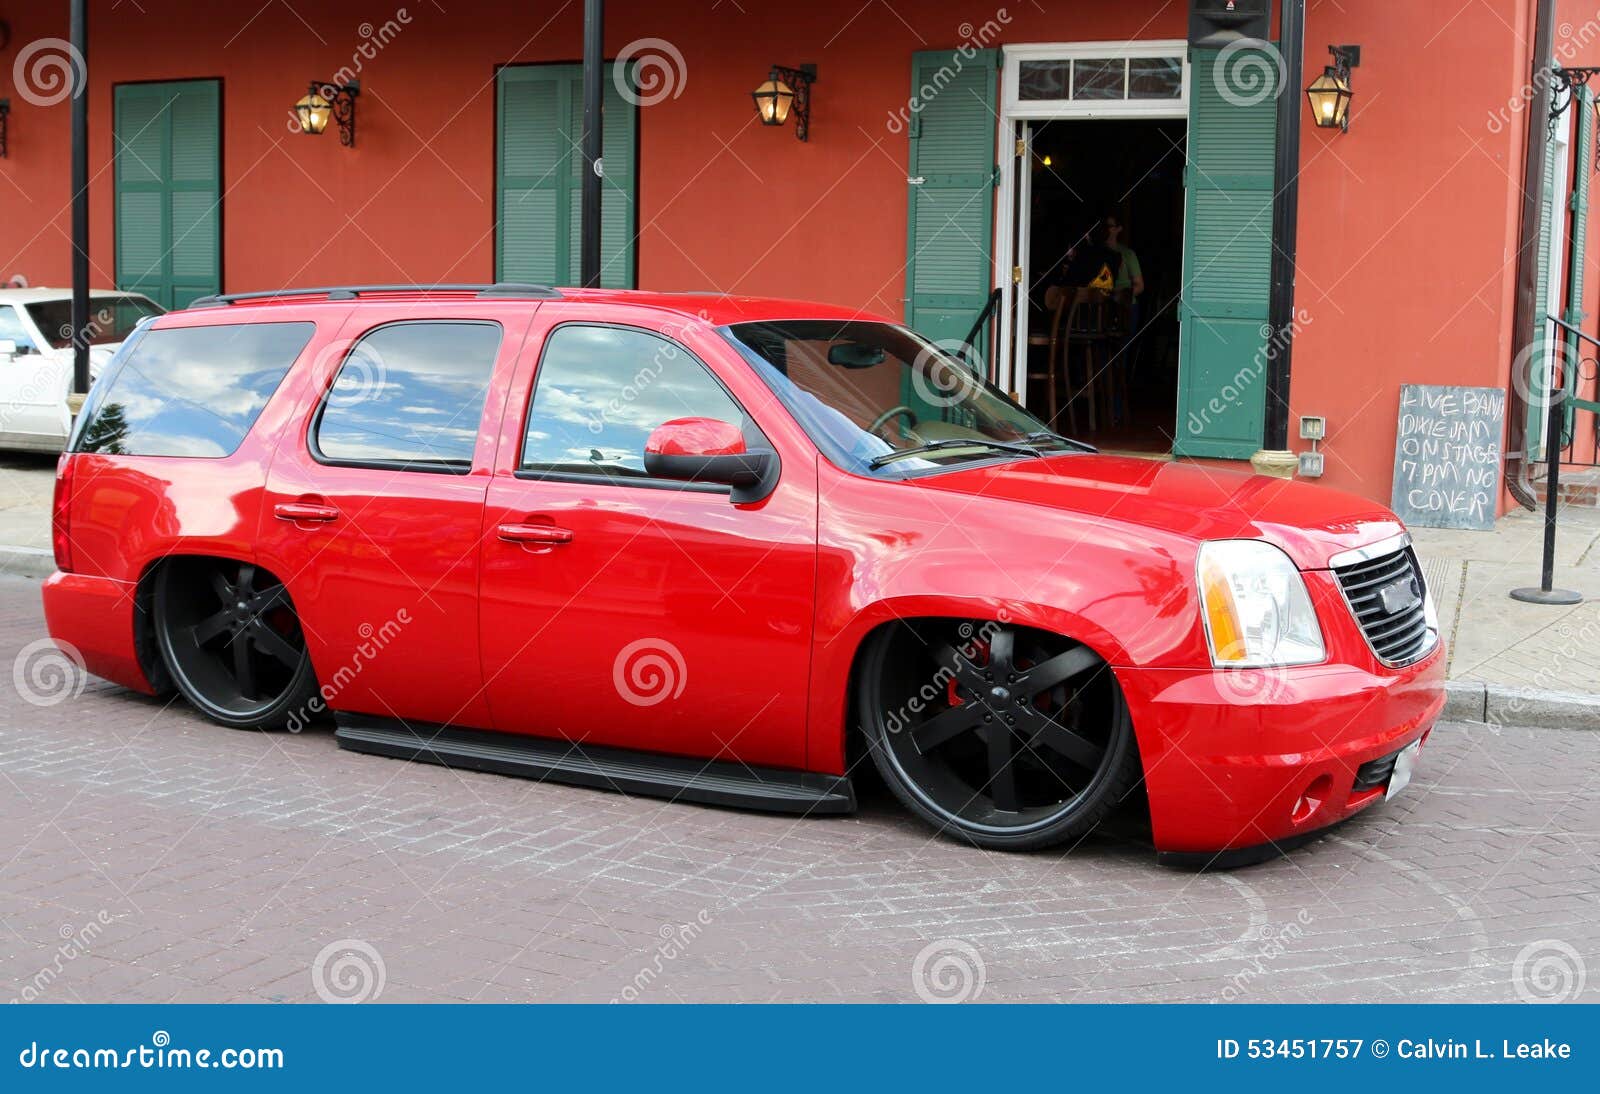 red-gmc-yukon-custom-lowered-springs-s-model-sport-utility-vehicle-fully-inch-wheels-53451757.jpg